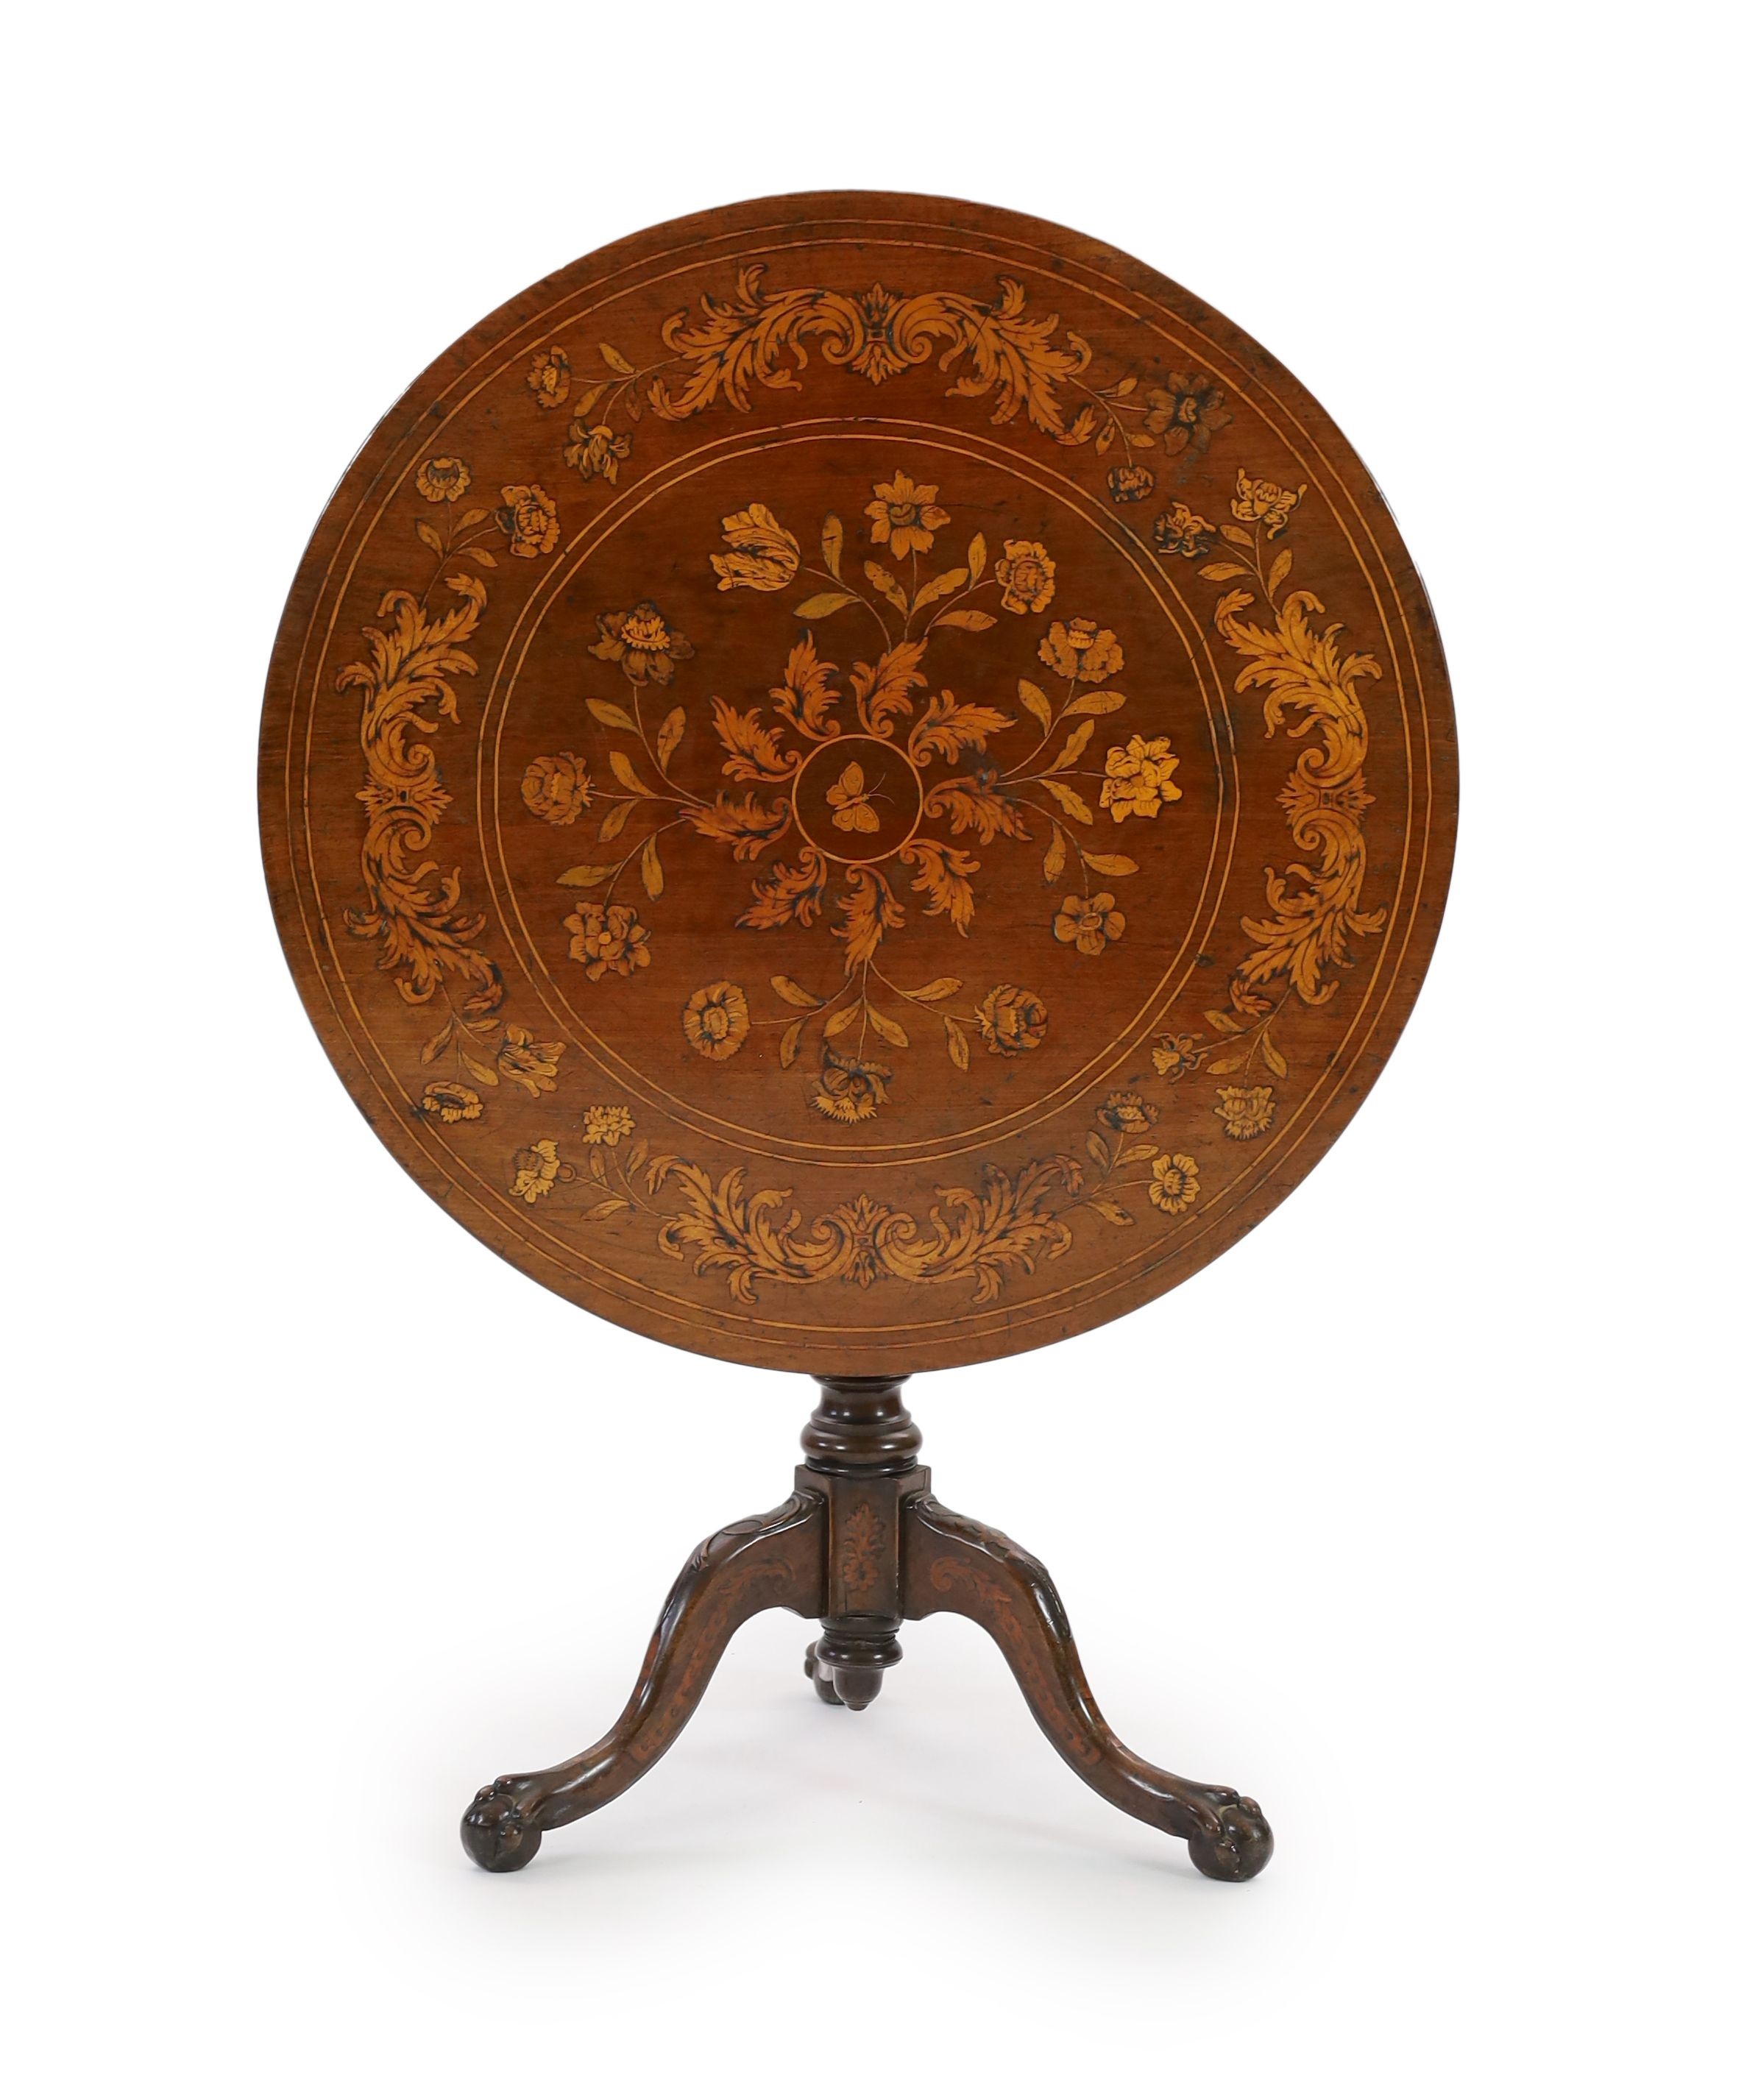 A mid to late 18th century Dutch marquetry inlaid walnut tripod table, Diam.83cm H.72cm